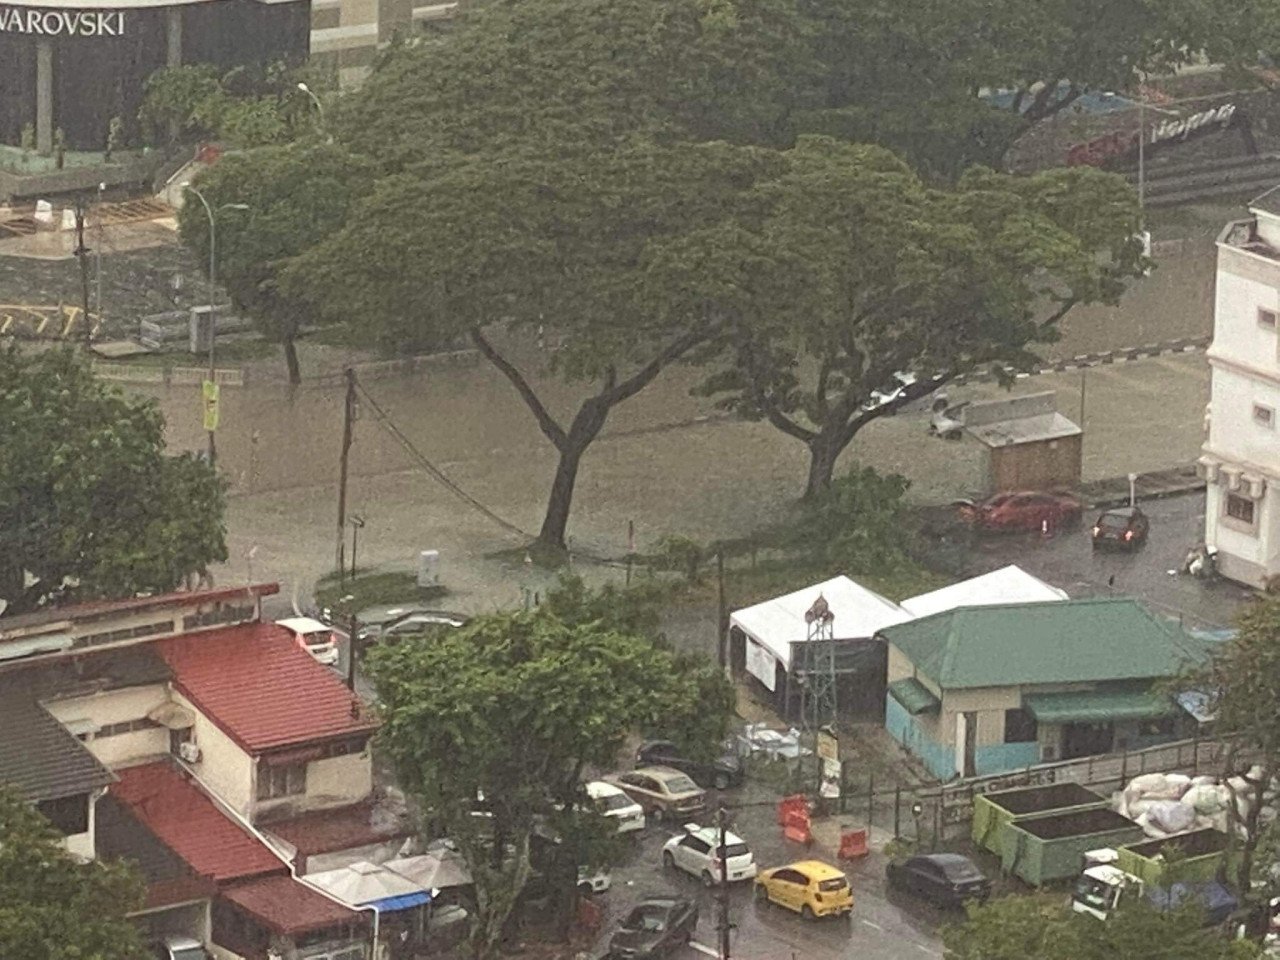 Beberapa kawasan termasuk Bayan Lepas, Bayan Baru serta Bukit Jambul terjejas akibat banjir kilat. - Gambar dari Facebook Penang Press